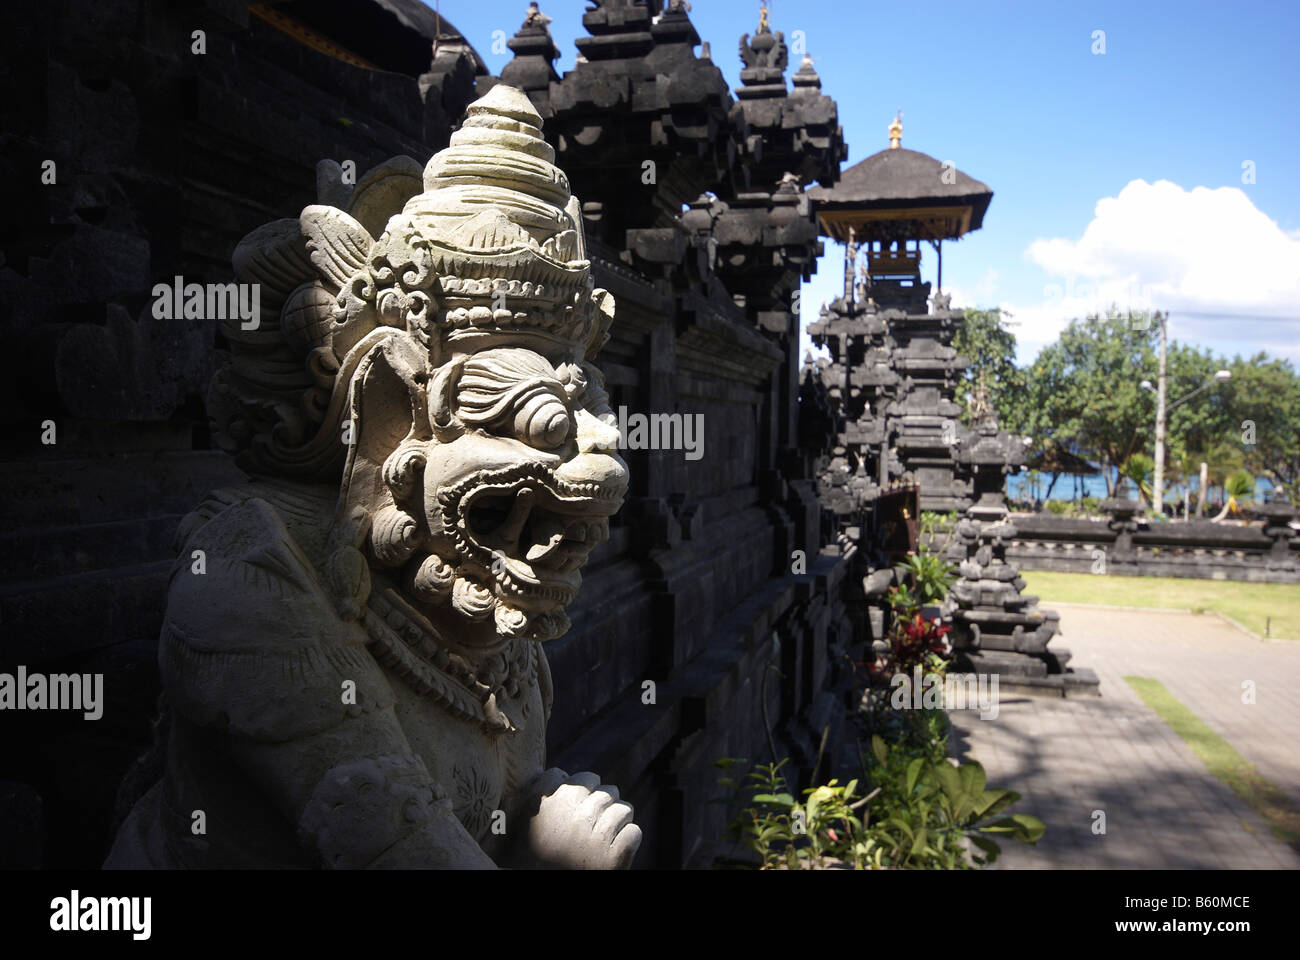 Statua Balinese a Goa Lawah (bat cave) tempio Foto Stock